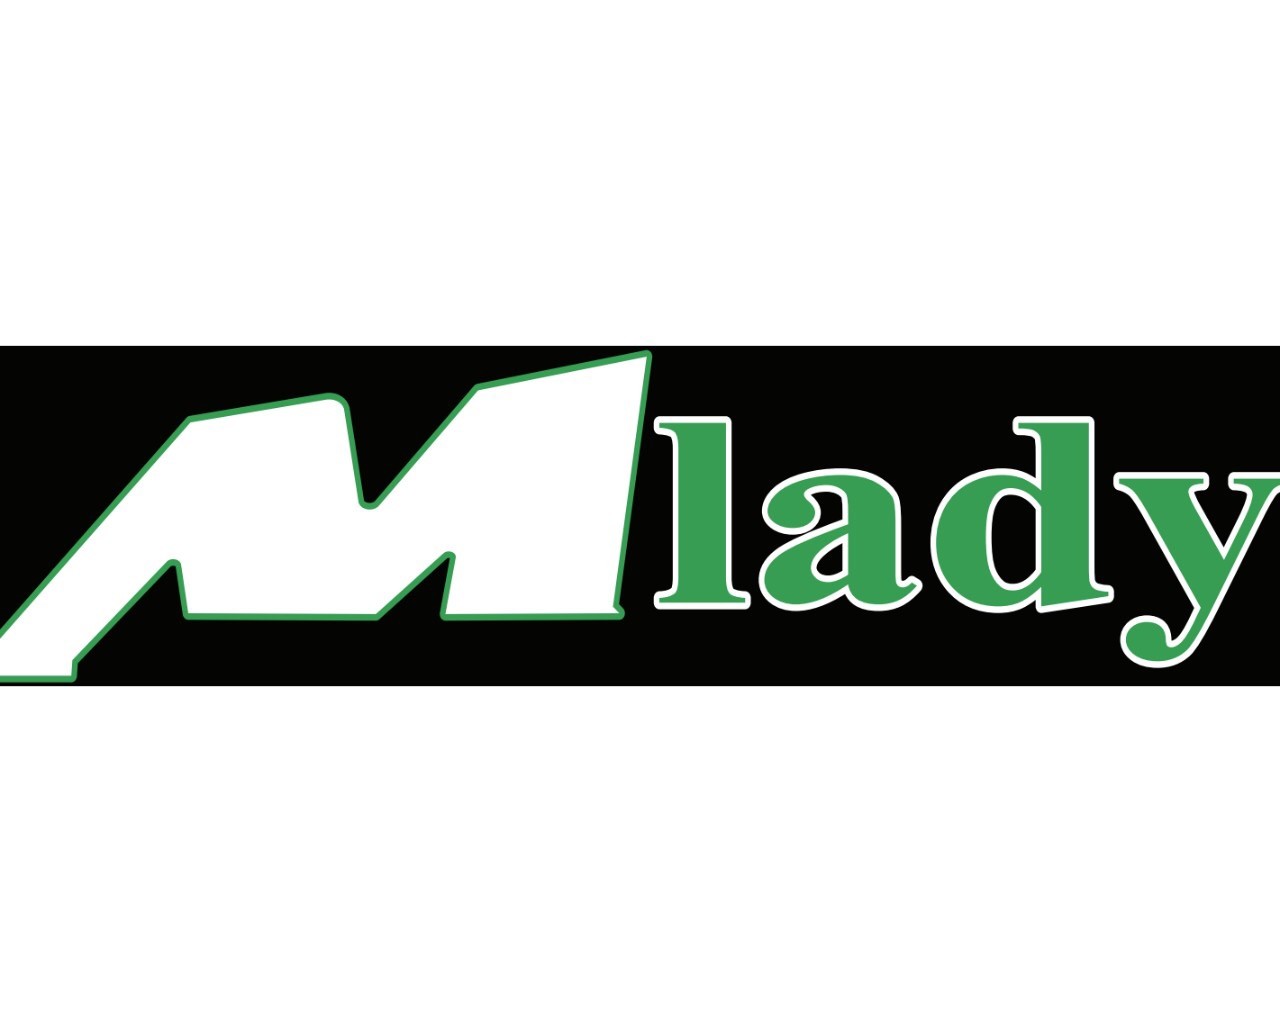 M-Lady